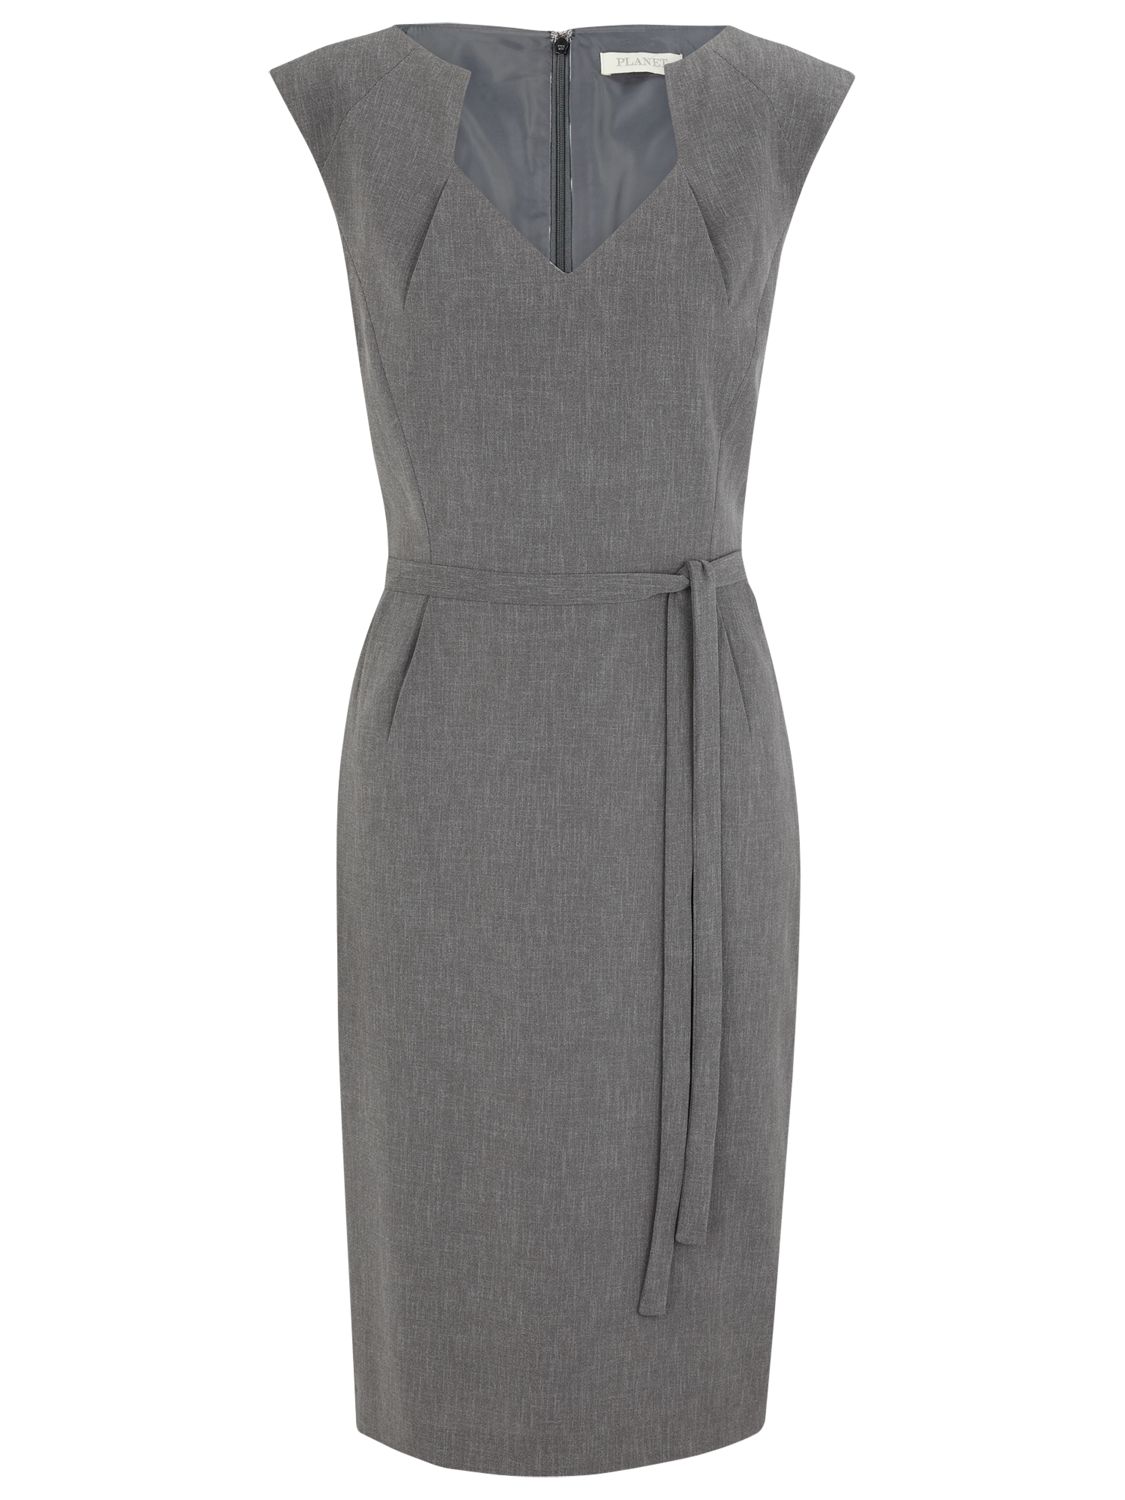 Dress Model Term on Buy Planet Notch Neck Shift Dress  Grey Online At Johnlewis Com   John